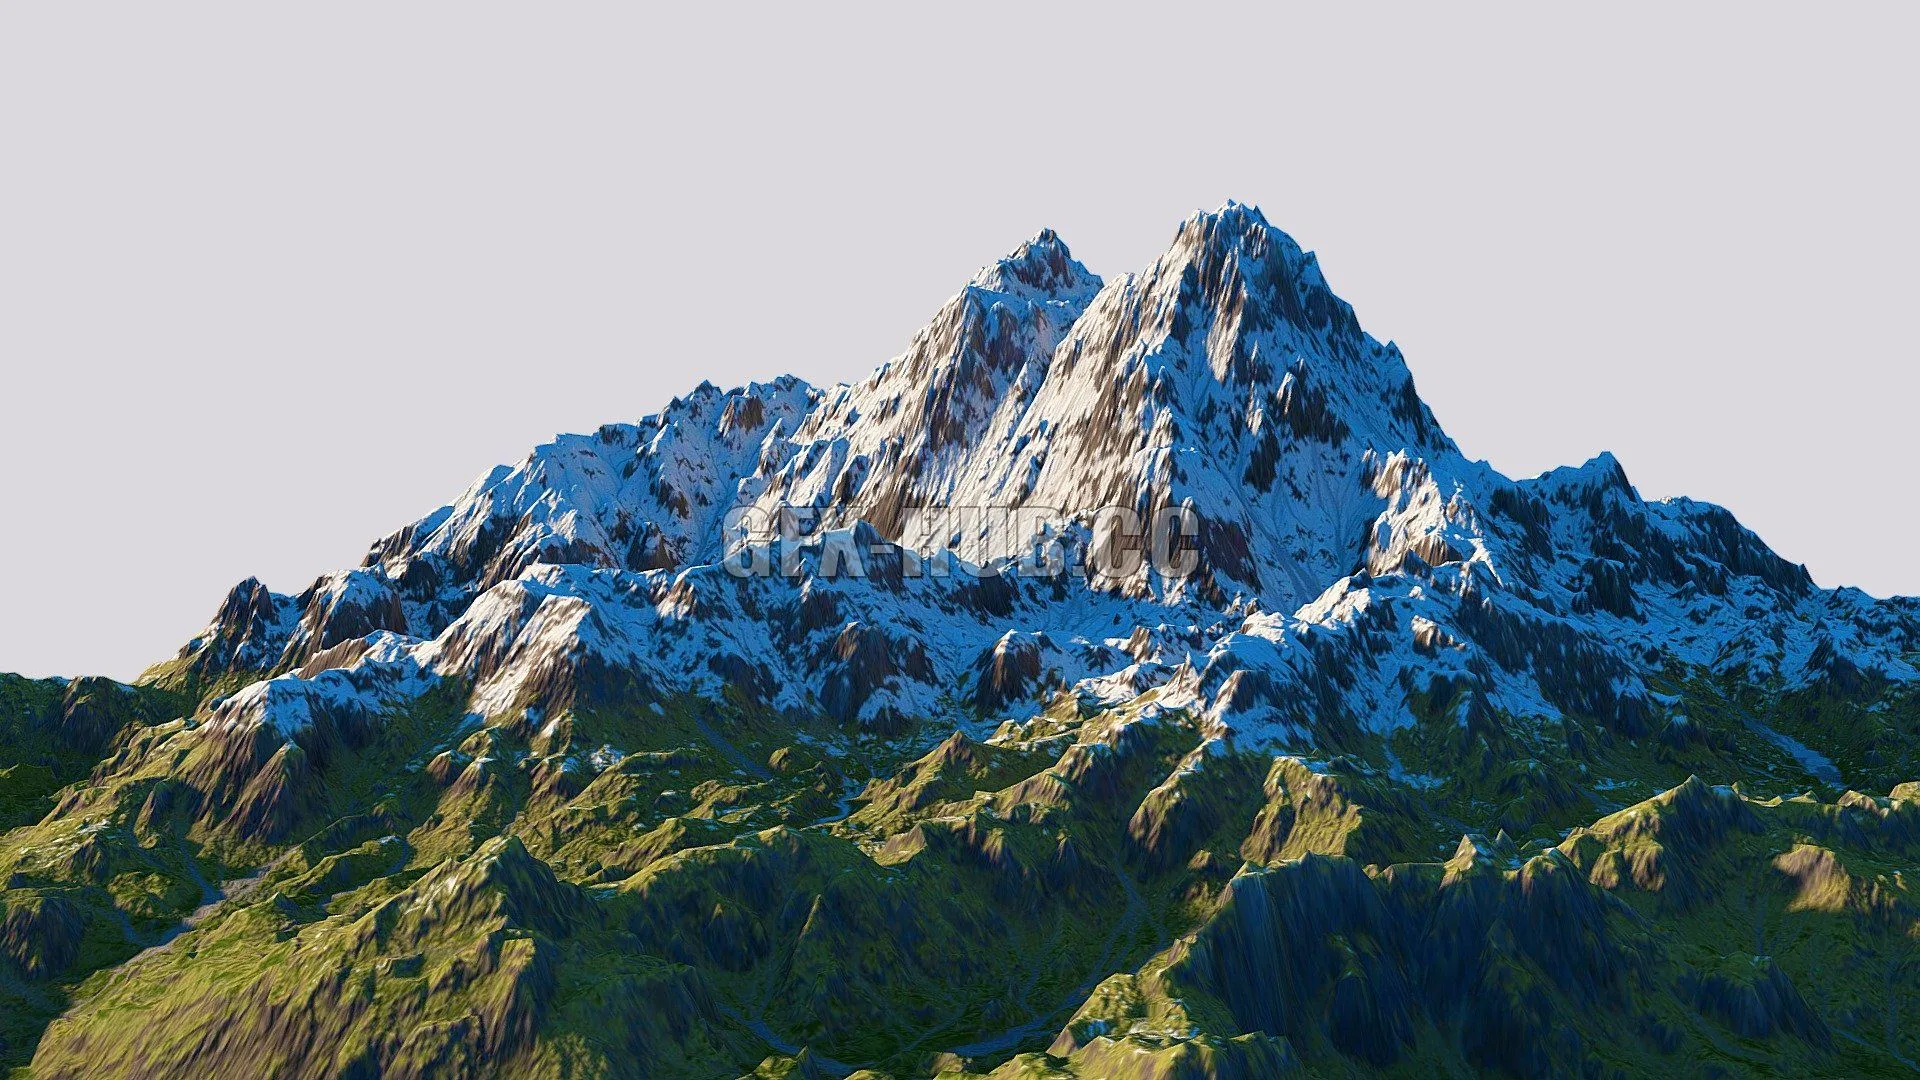 PBR Game 3D Model – Hero mountain